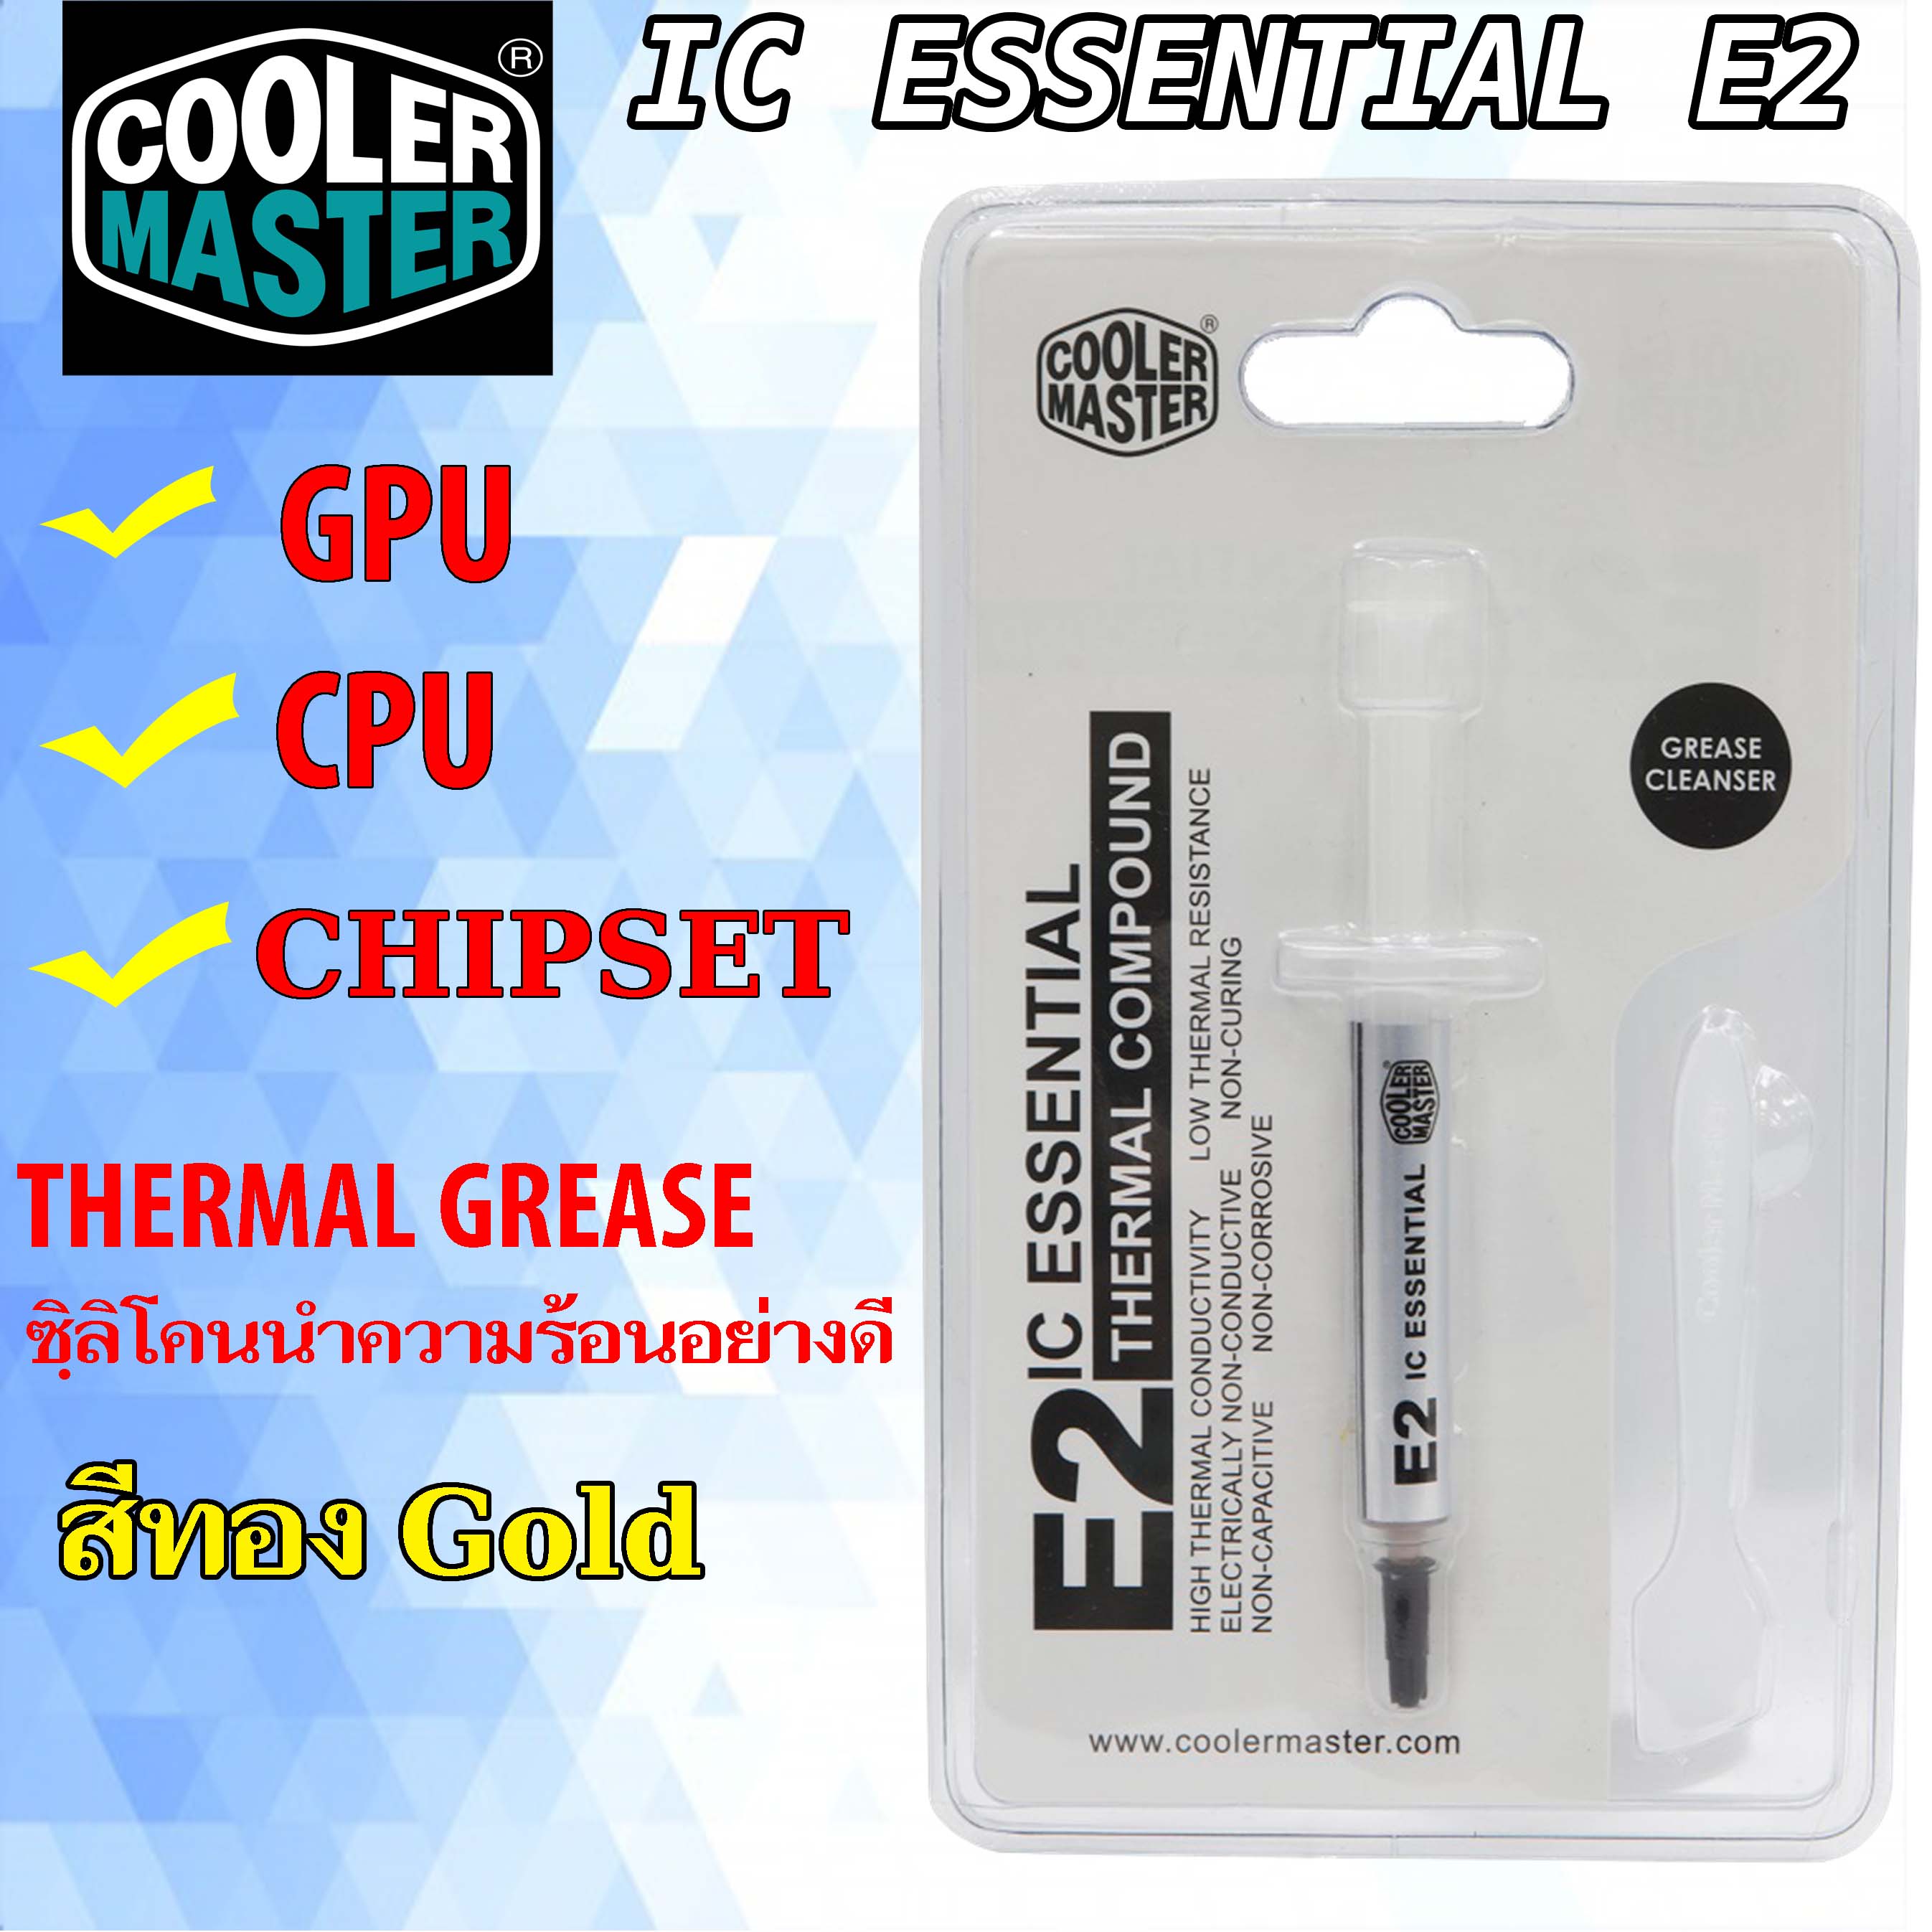 CoolerMaster IC ESSENTIAL E2 Thermal Grease ซิลิโคนสำหรับนำความร้อน CPU/GPU คุณภาพสูง สีทอง